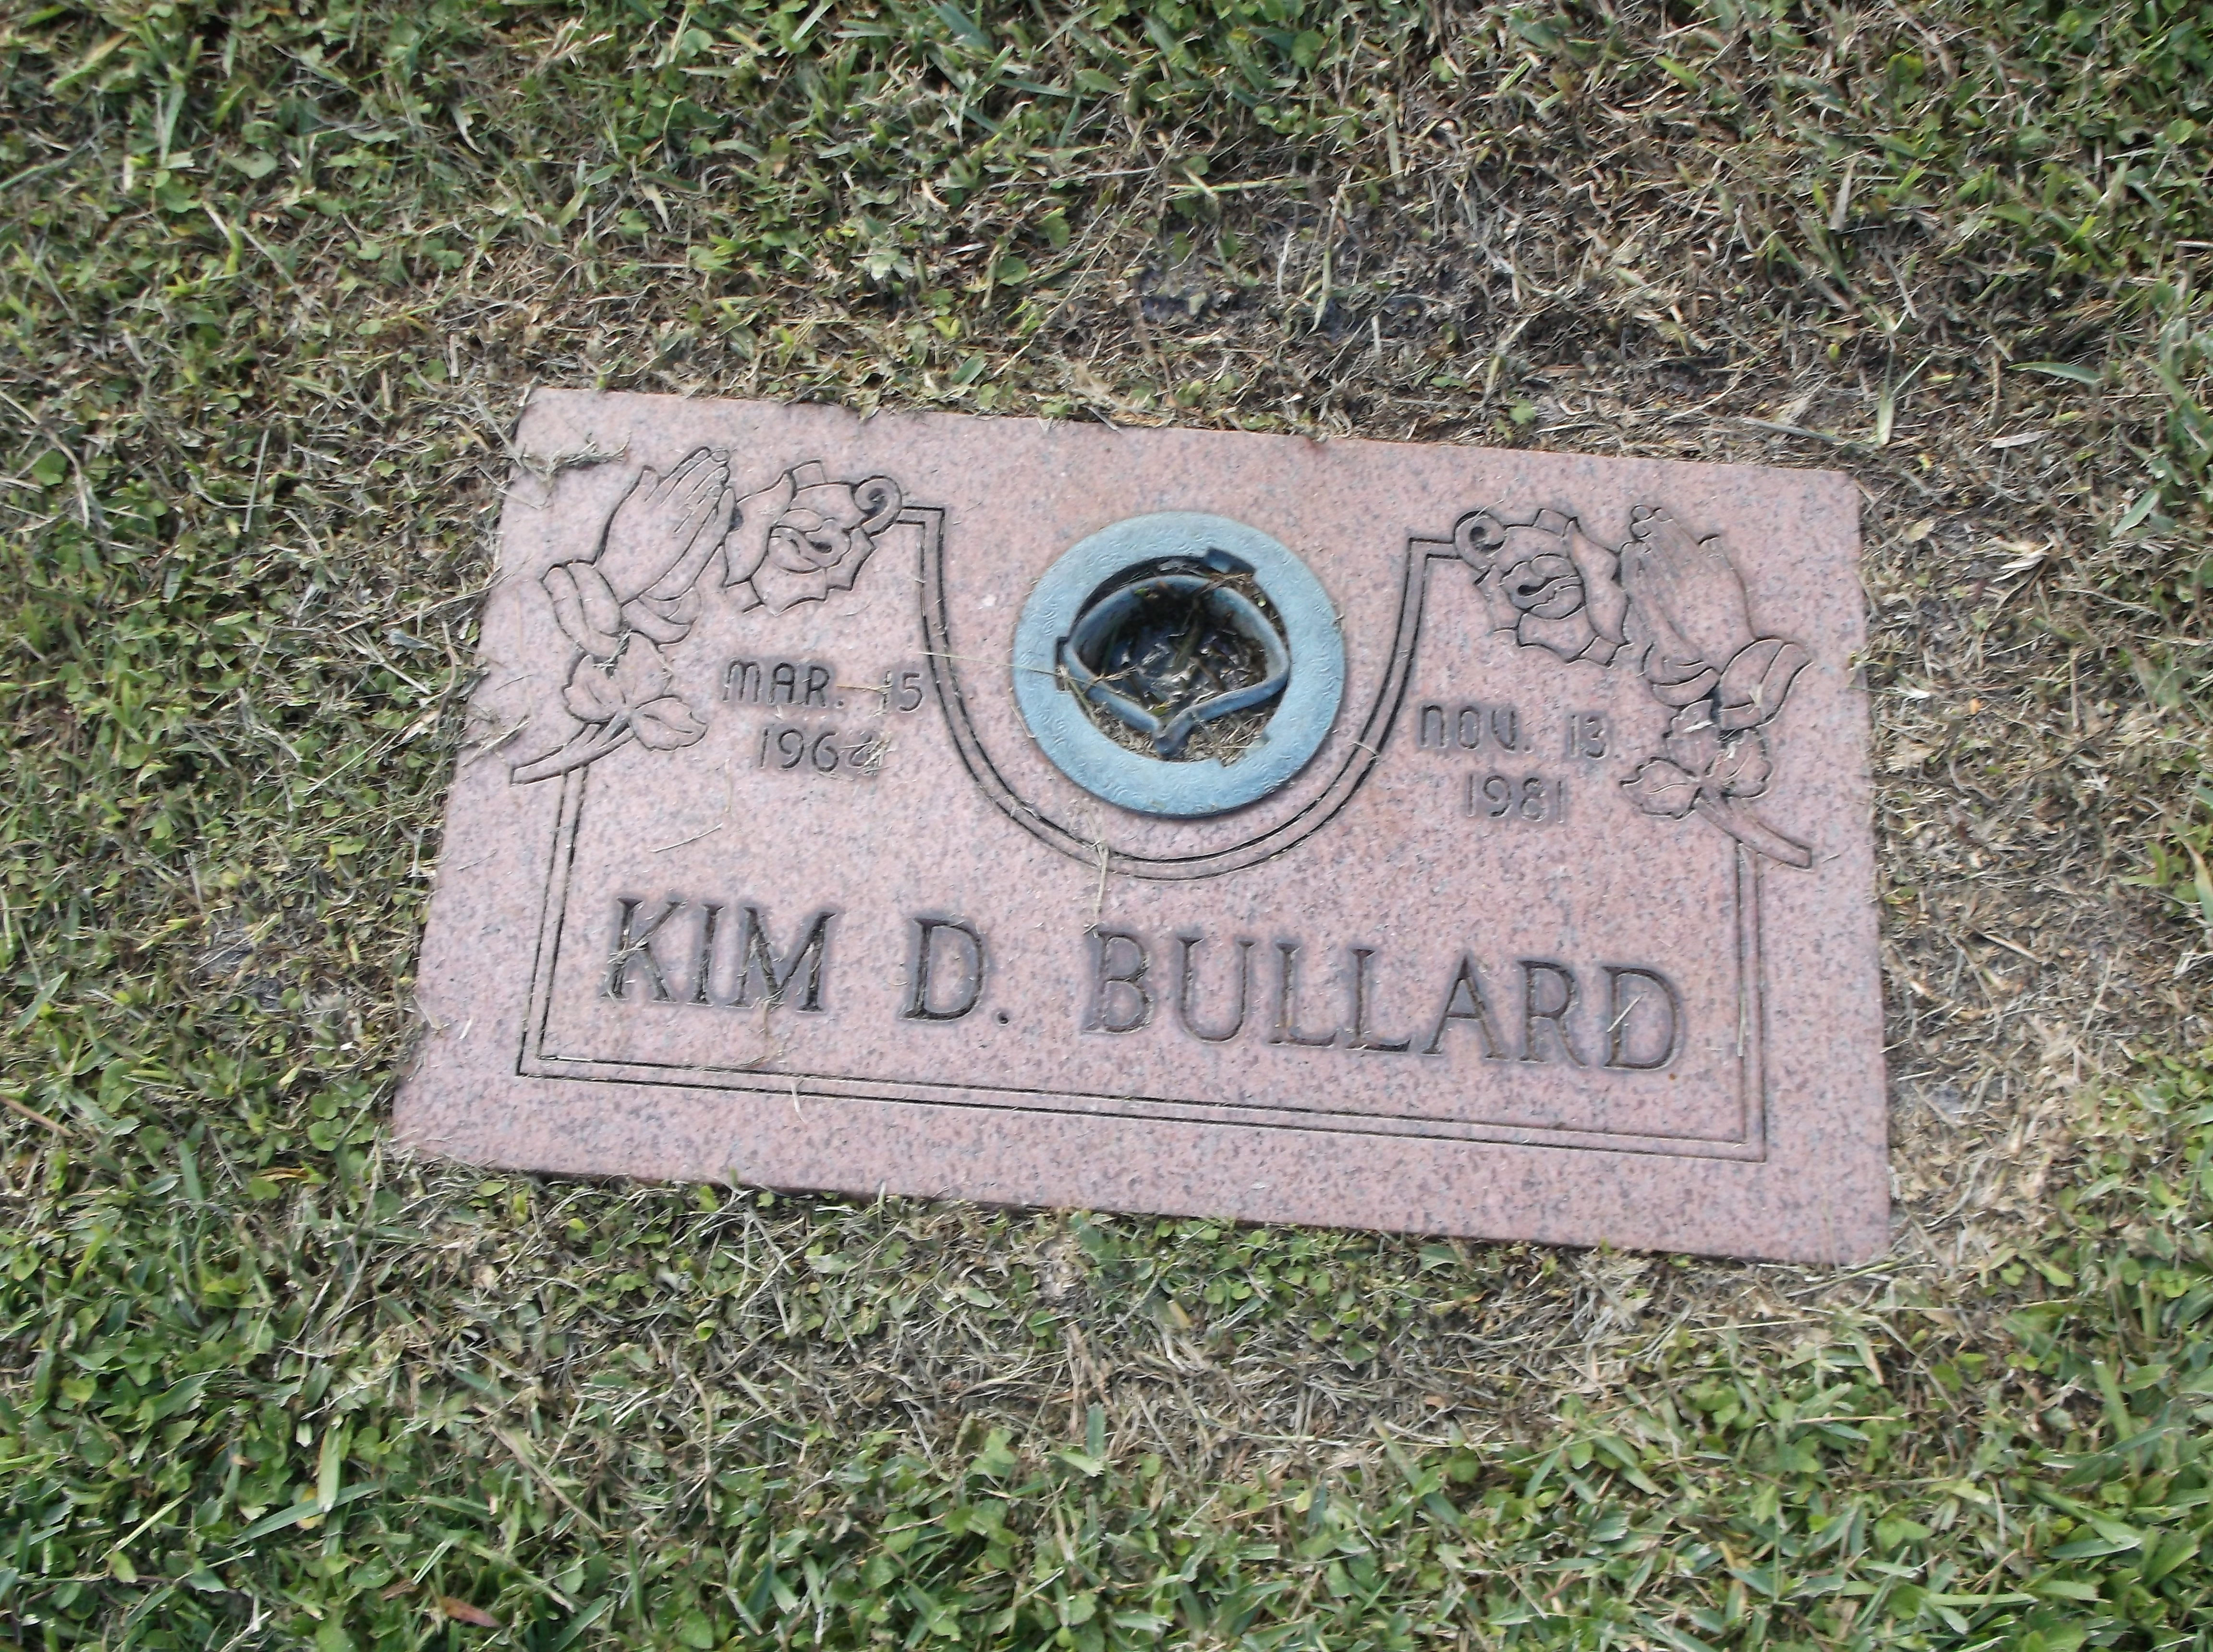 Kim D Bullard